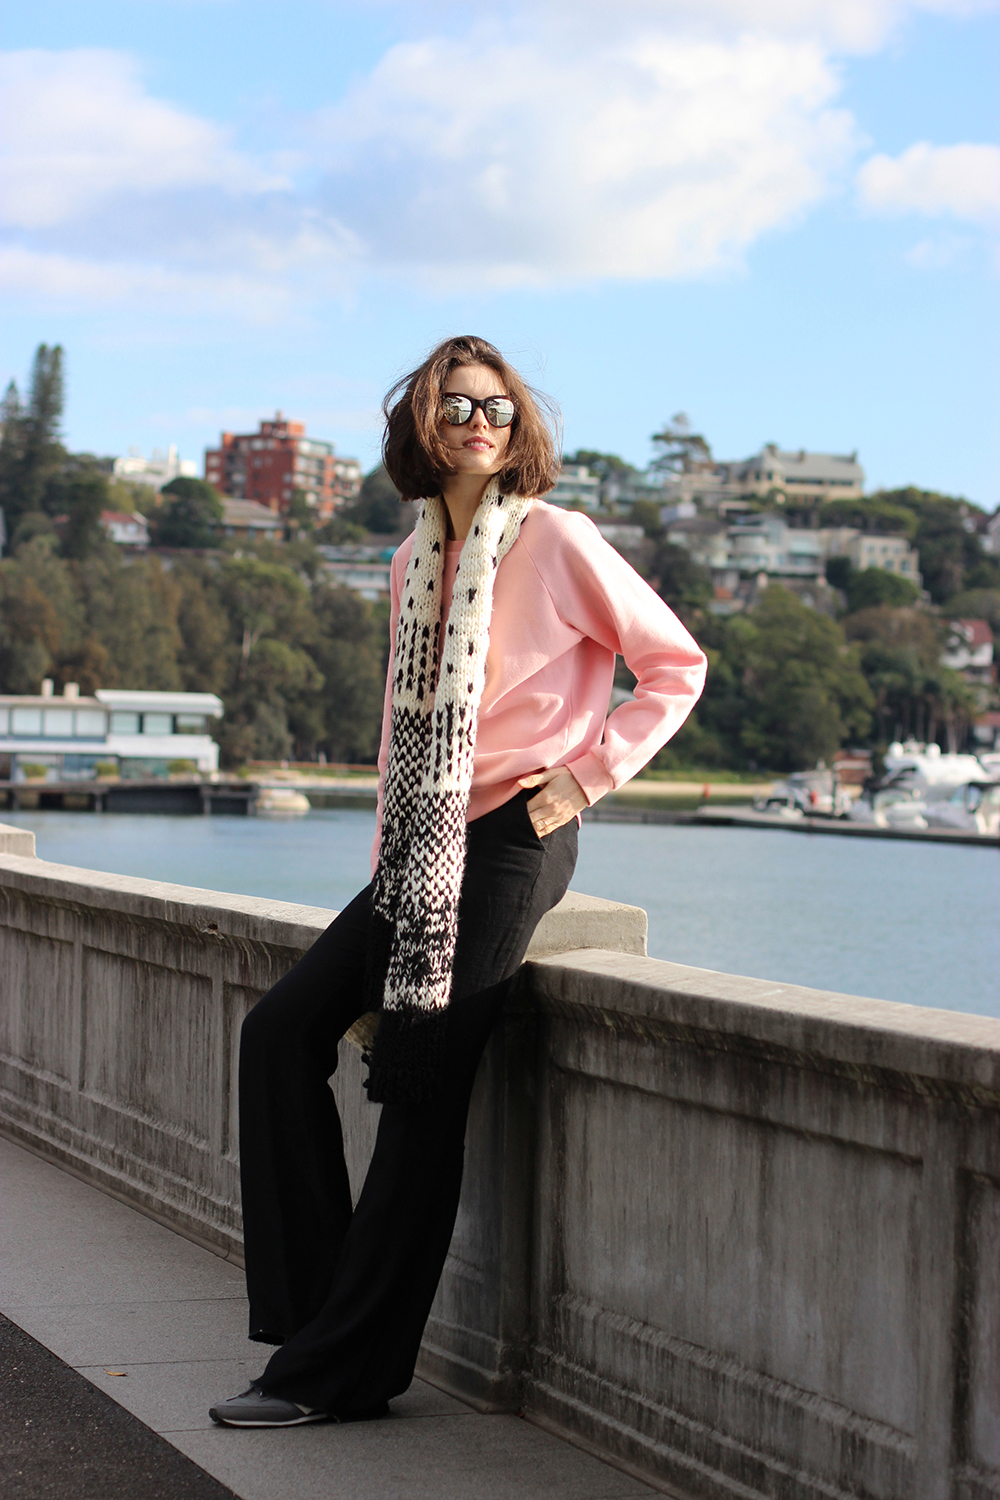 Australian fashion and shopping blogger Chloe Hill